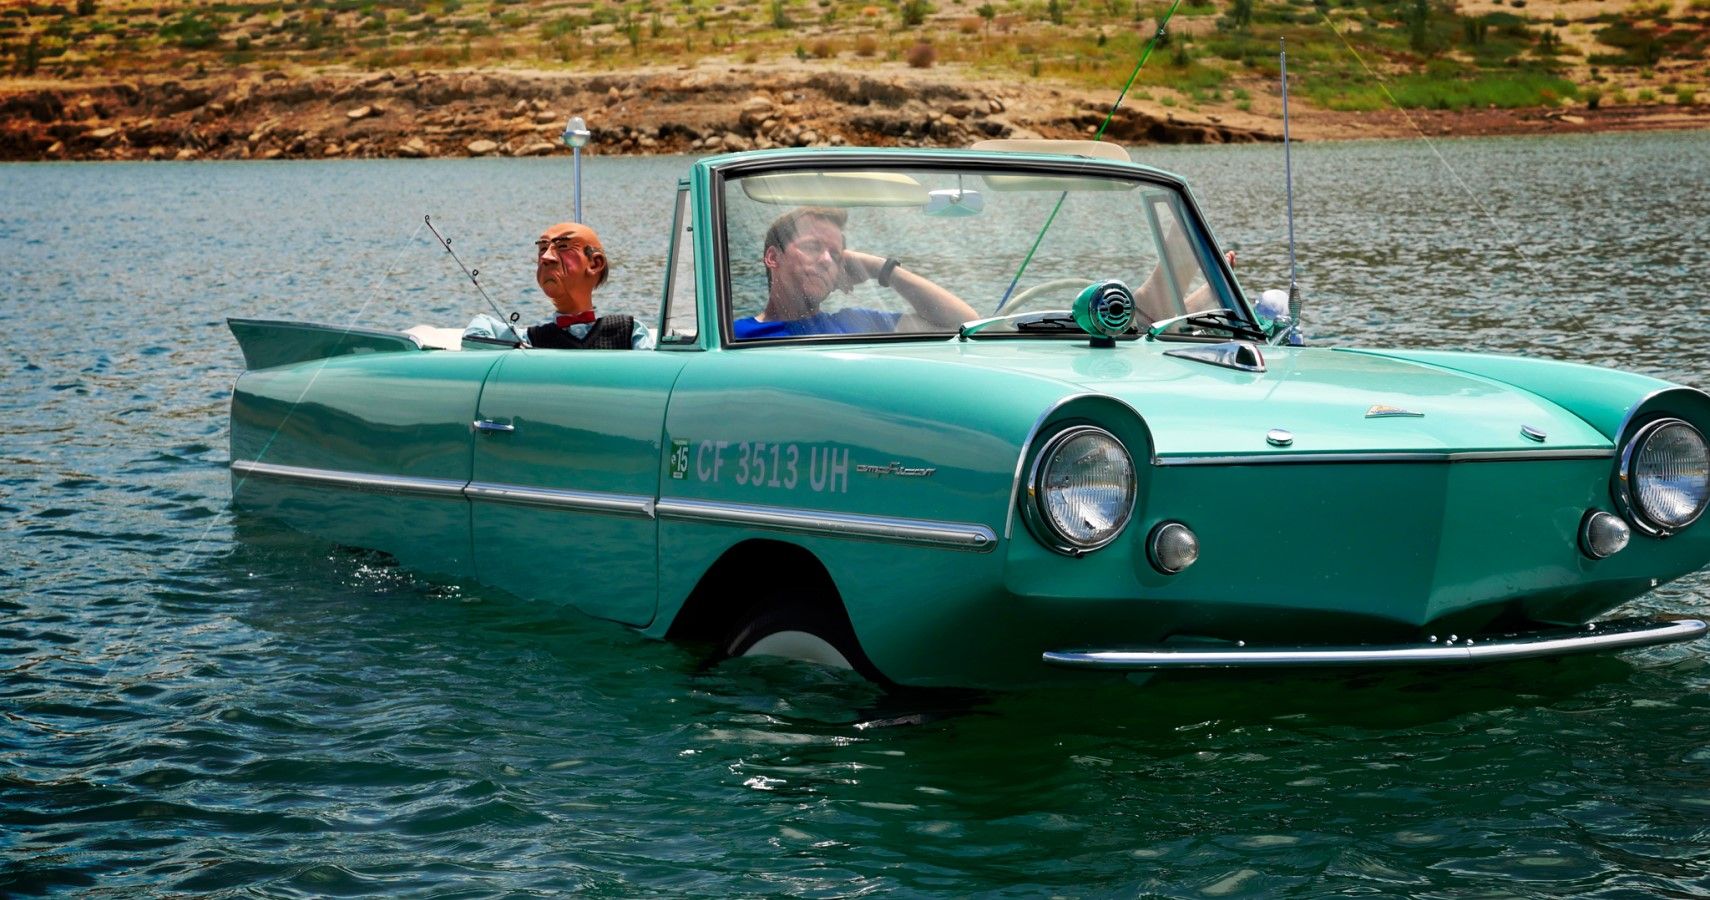 Jeff Dunham's Amphicar Driving On Water